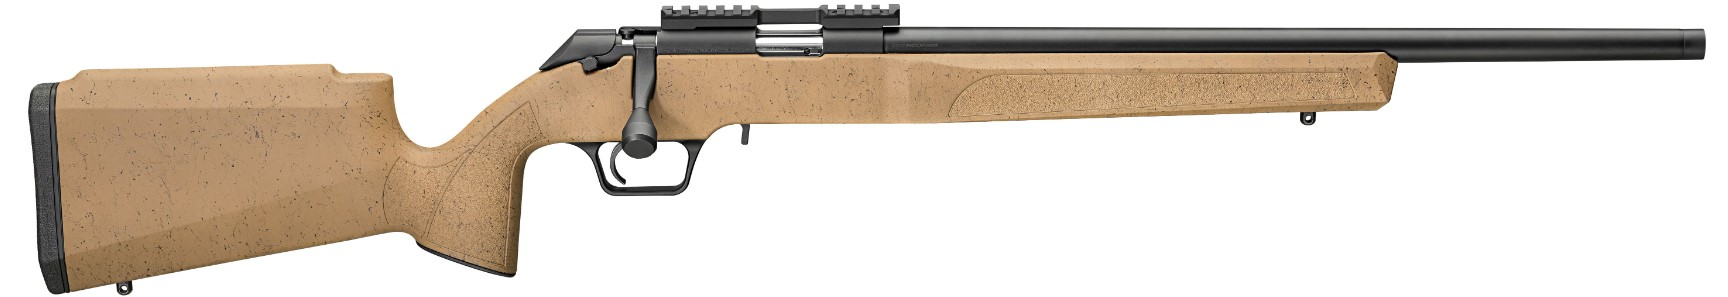 SPR 2020 TRGT 20 COYOTE 22LR - Long Guns